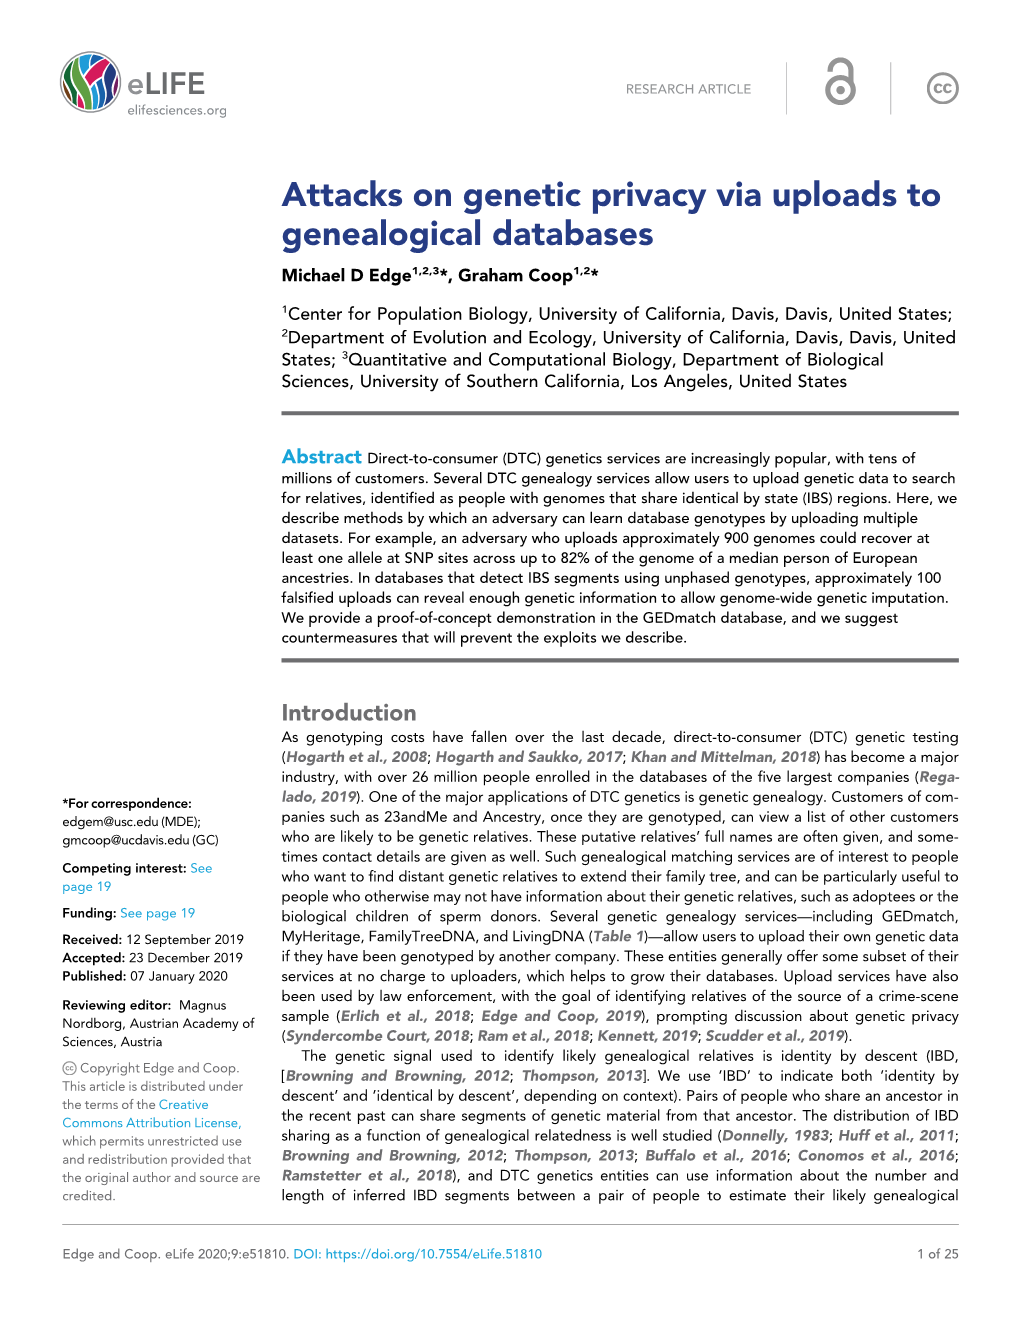 Attacks on Genetic Privacy Via Uploads to Genealogical Databases Michael D Edge1,2,3*, Graham Coop1,2*